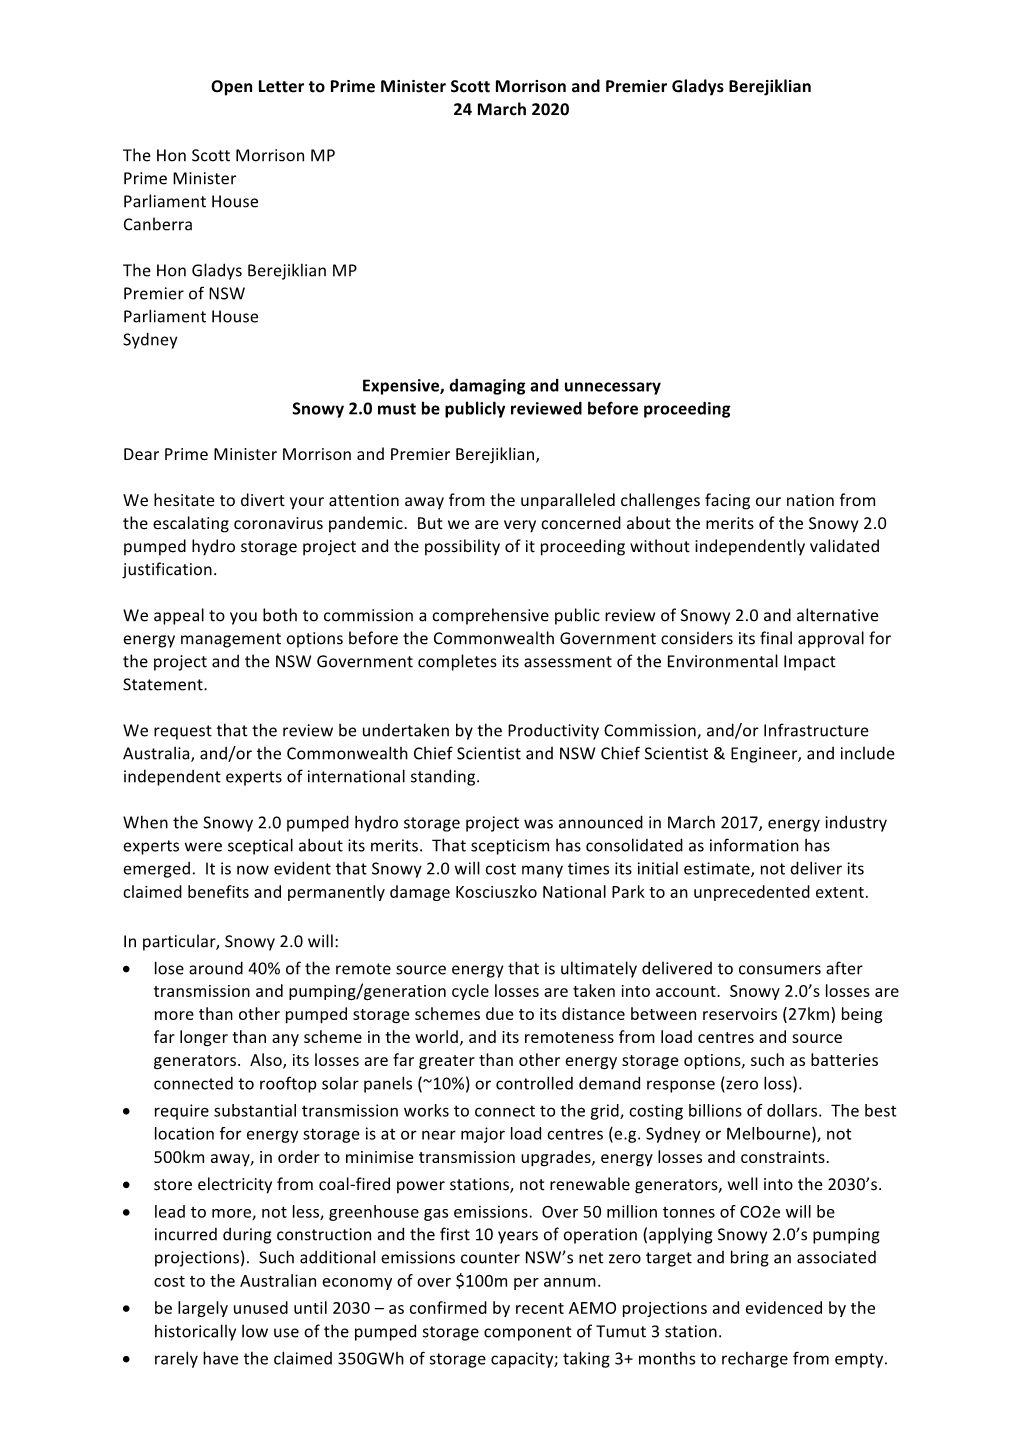 Open Letter to Prime Minister Scott Morrison and Premier Gladys Berejiklian 24 March 2020